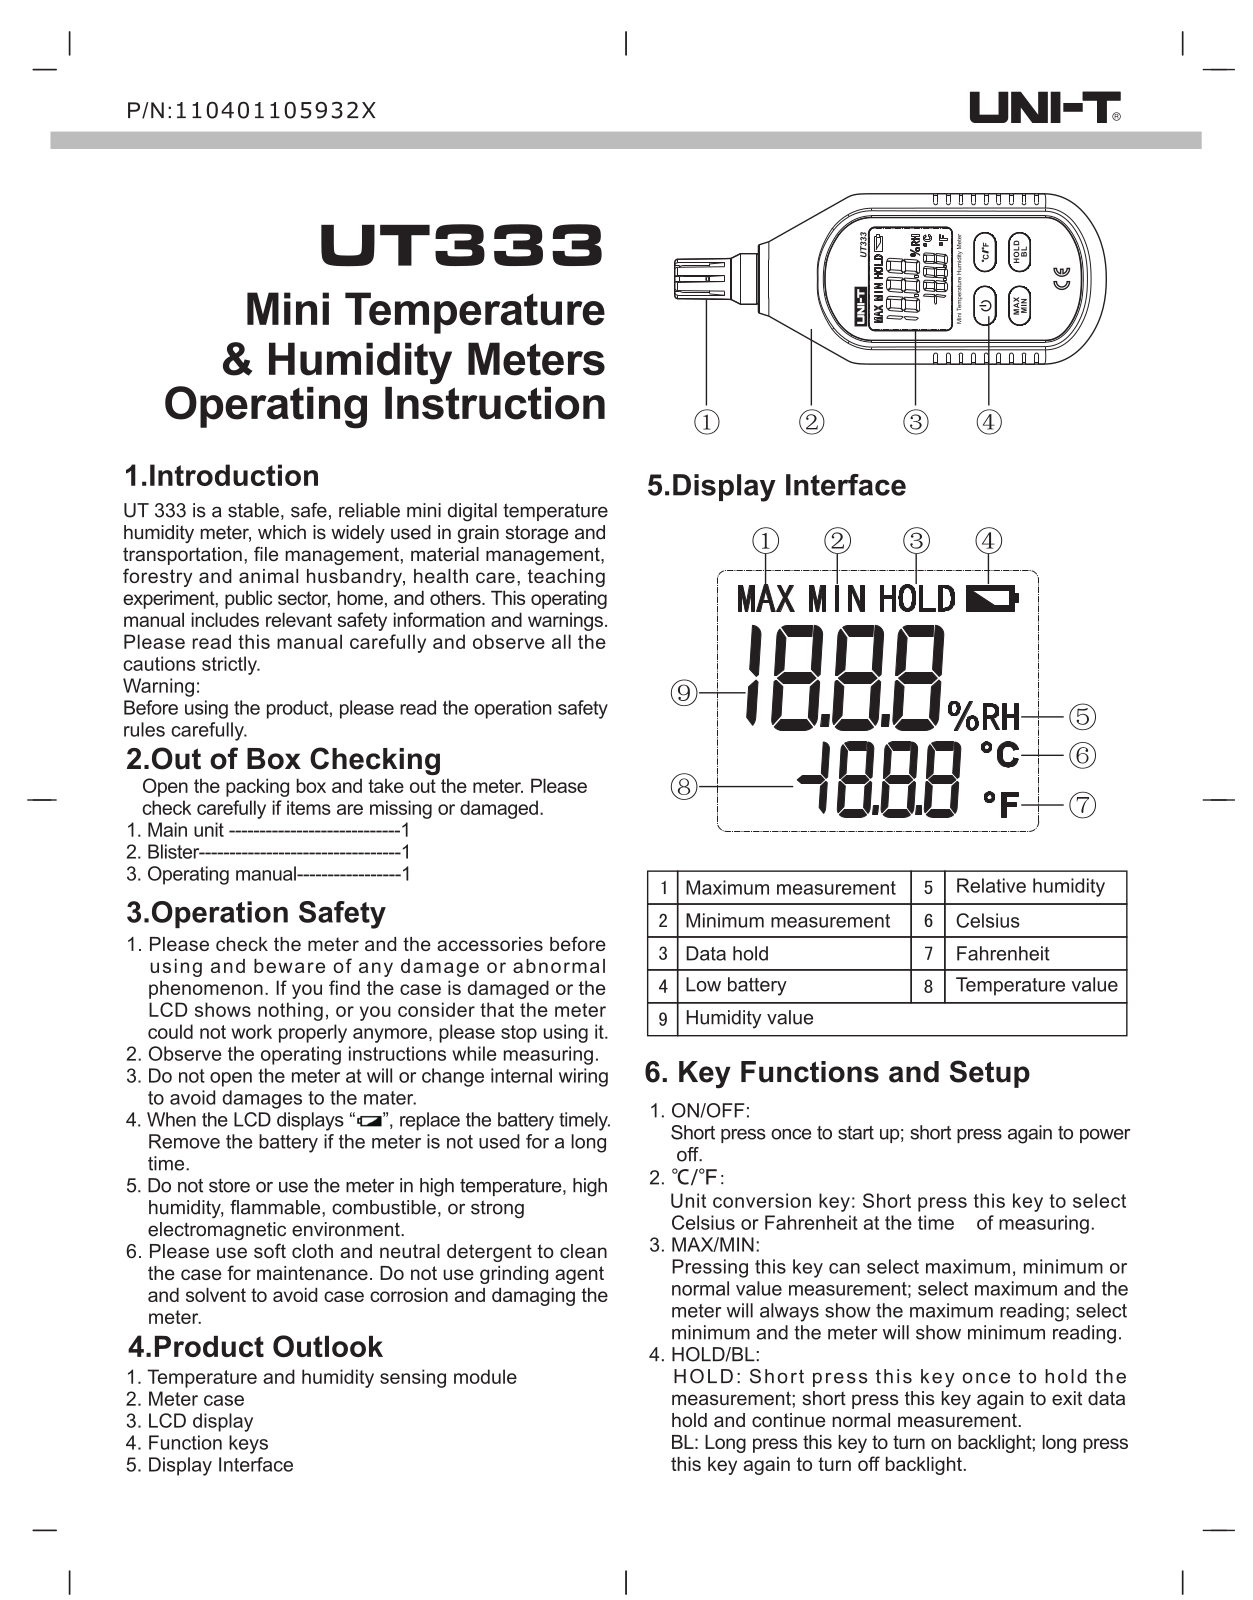 Uni-t UT333 User Manual